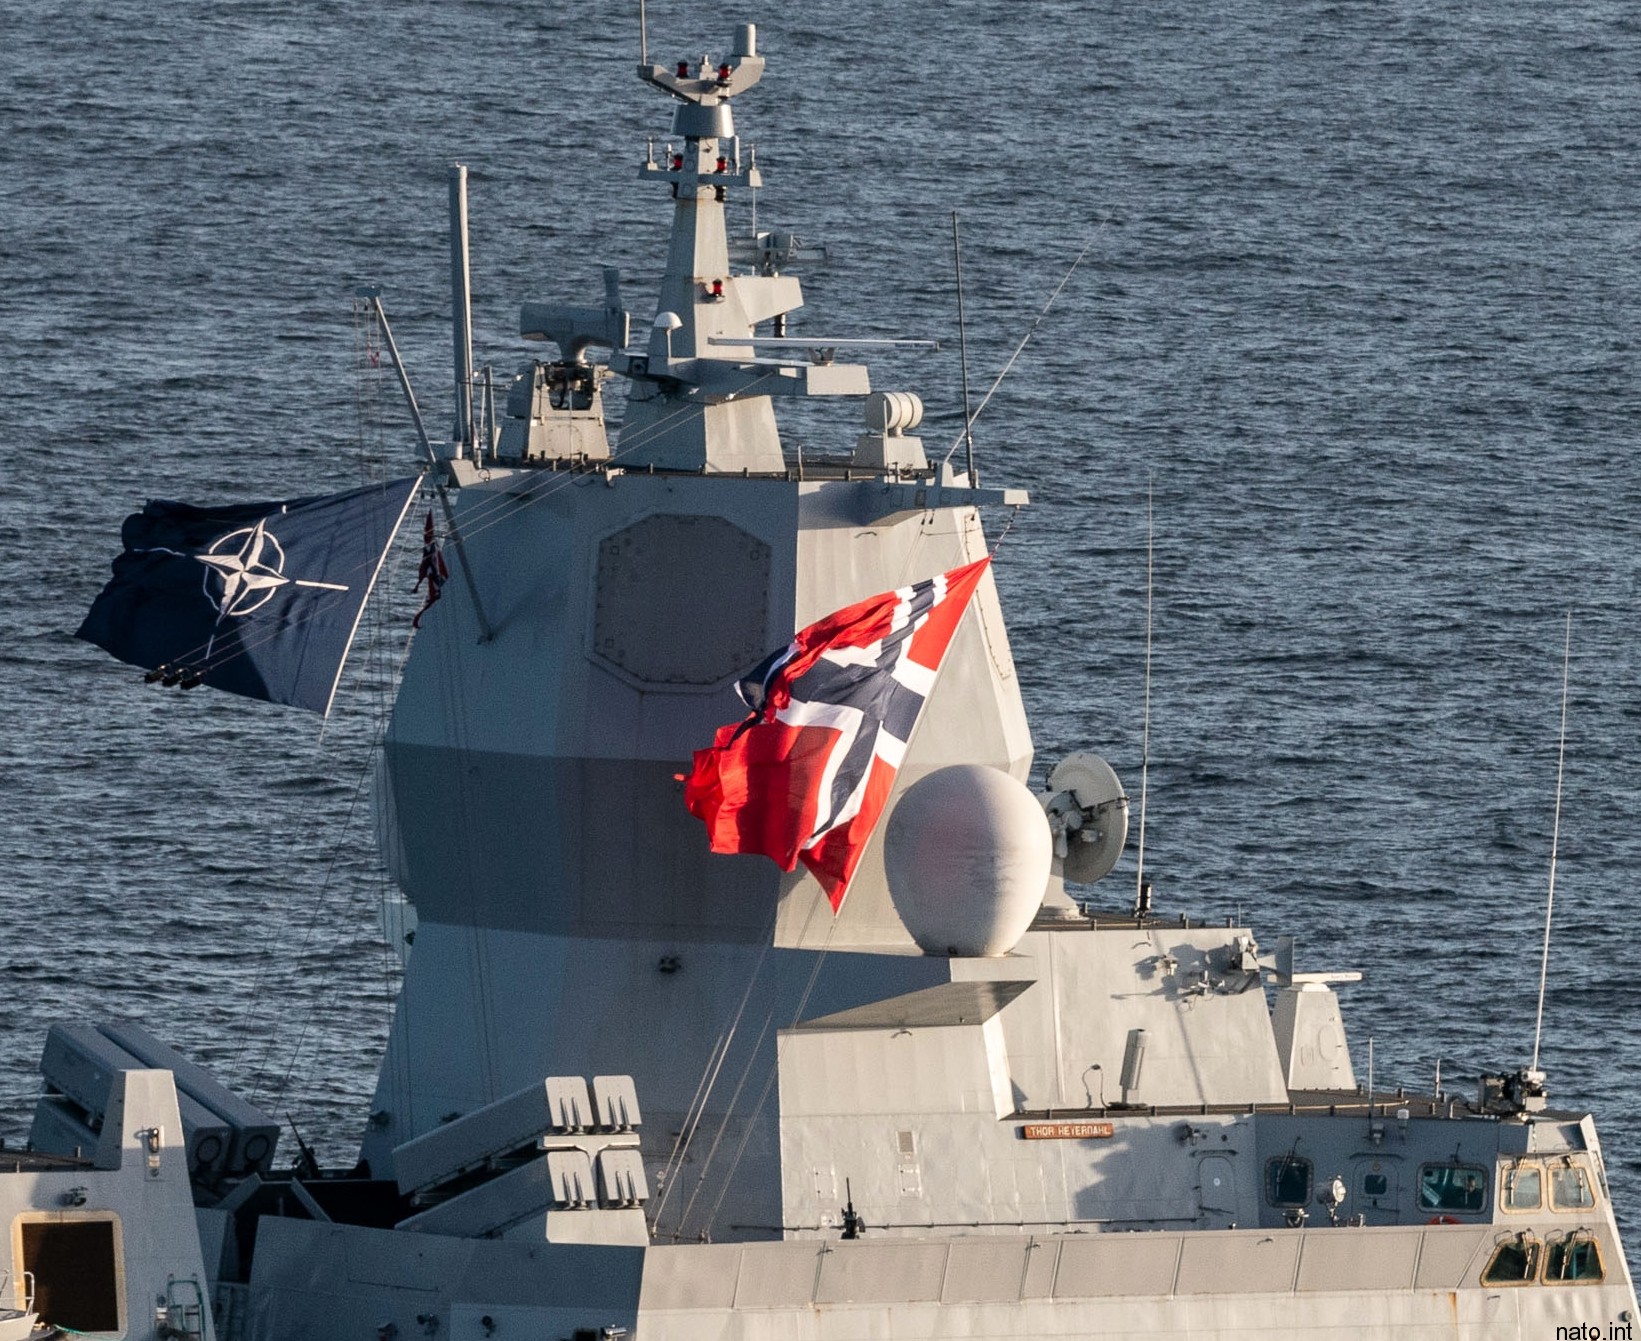 f-314 thor heyerdahl hnoms knm fridtjof nansen class frigate royal norwegian navy 48 an/spy-1f radar aegis